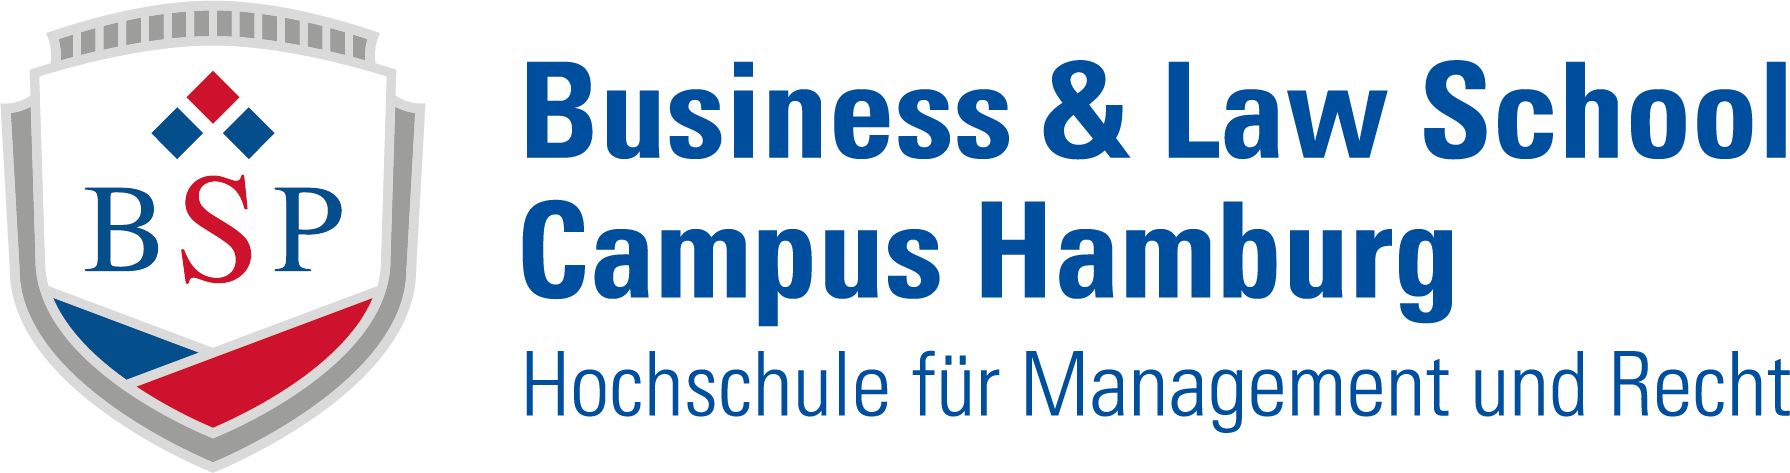 BSP_Logo_BusinessLaw_CH_2021.png logo